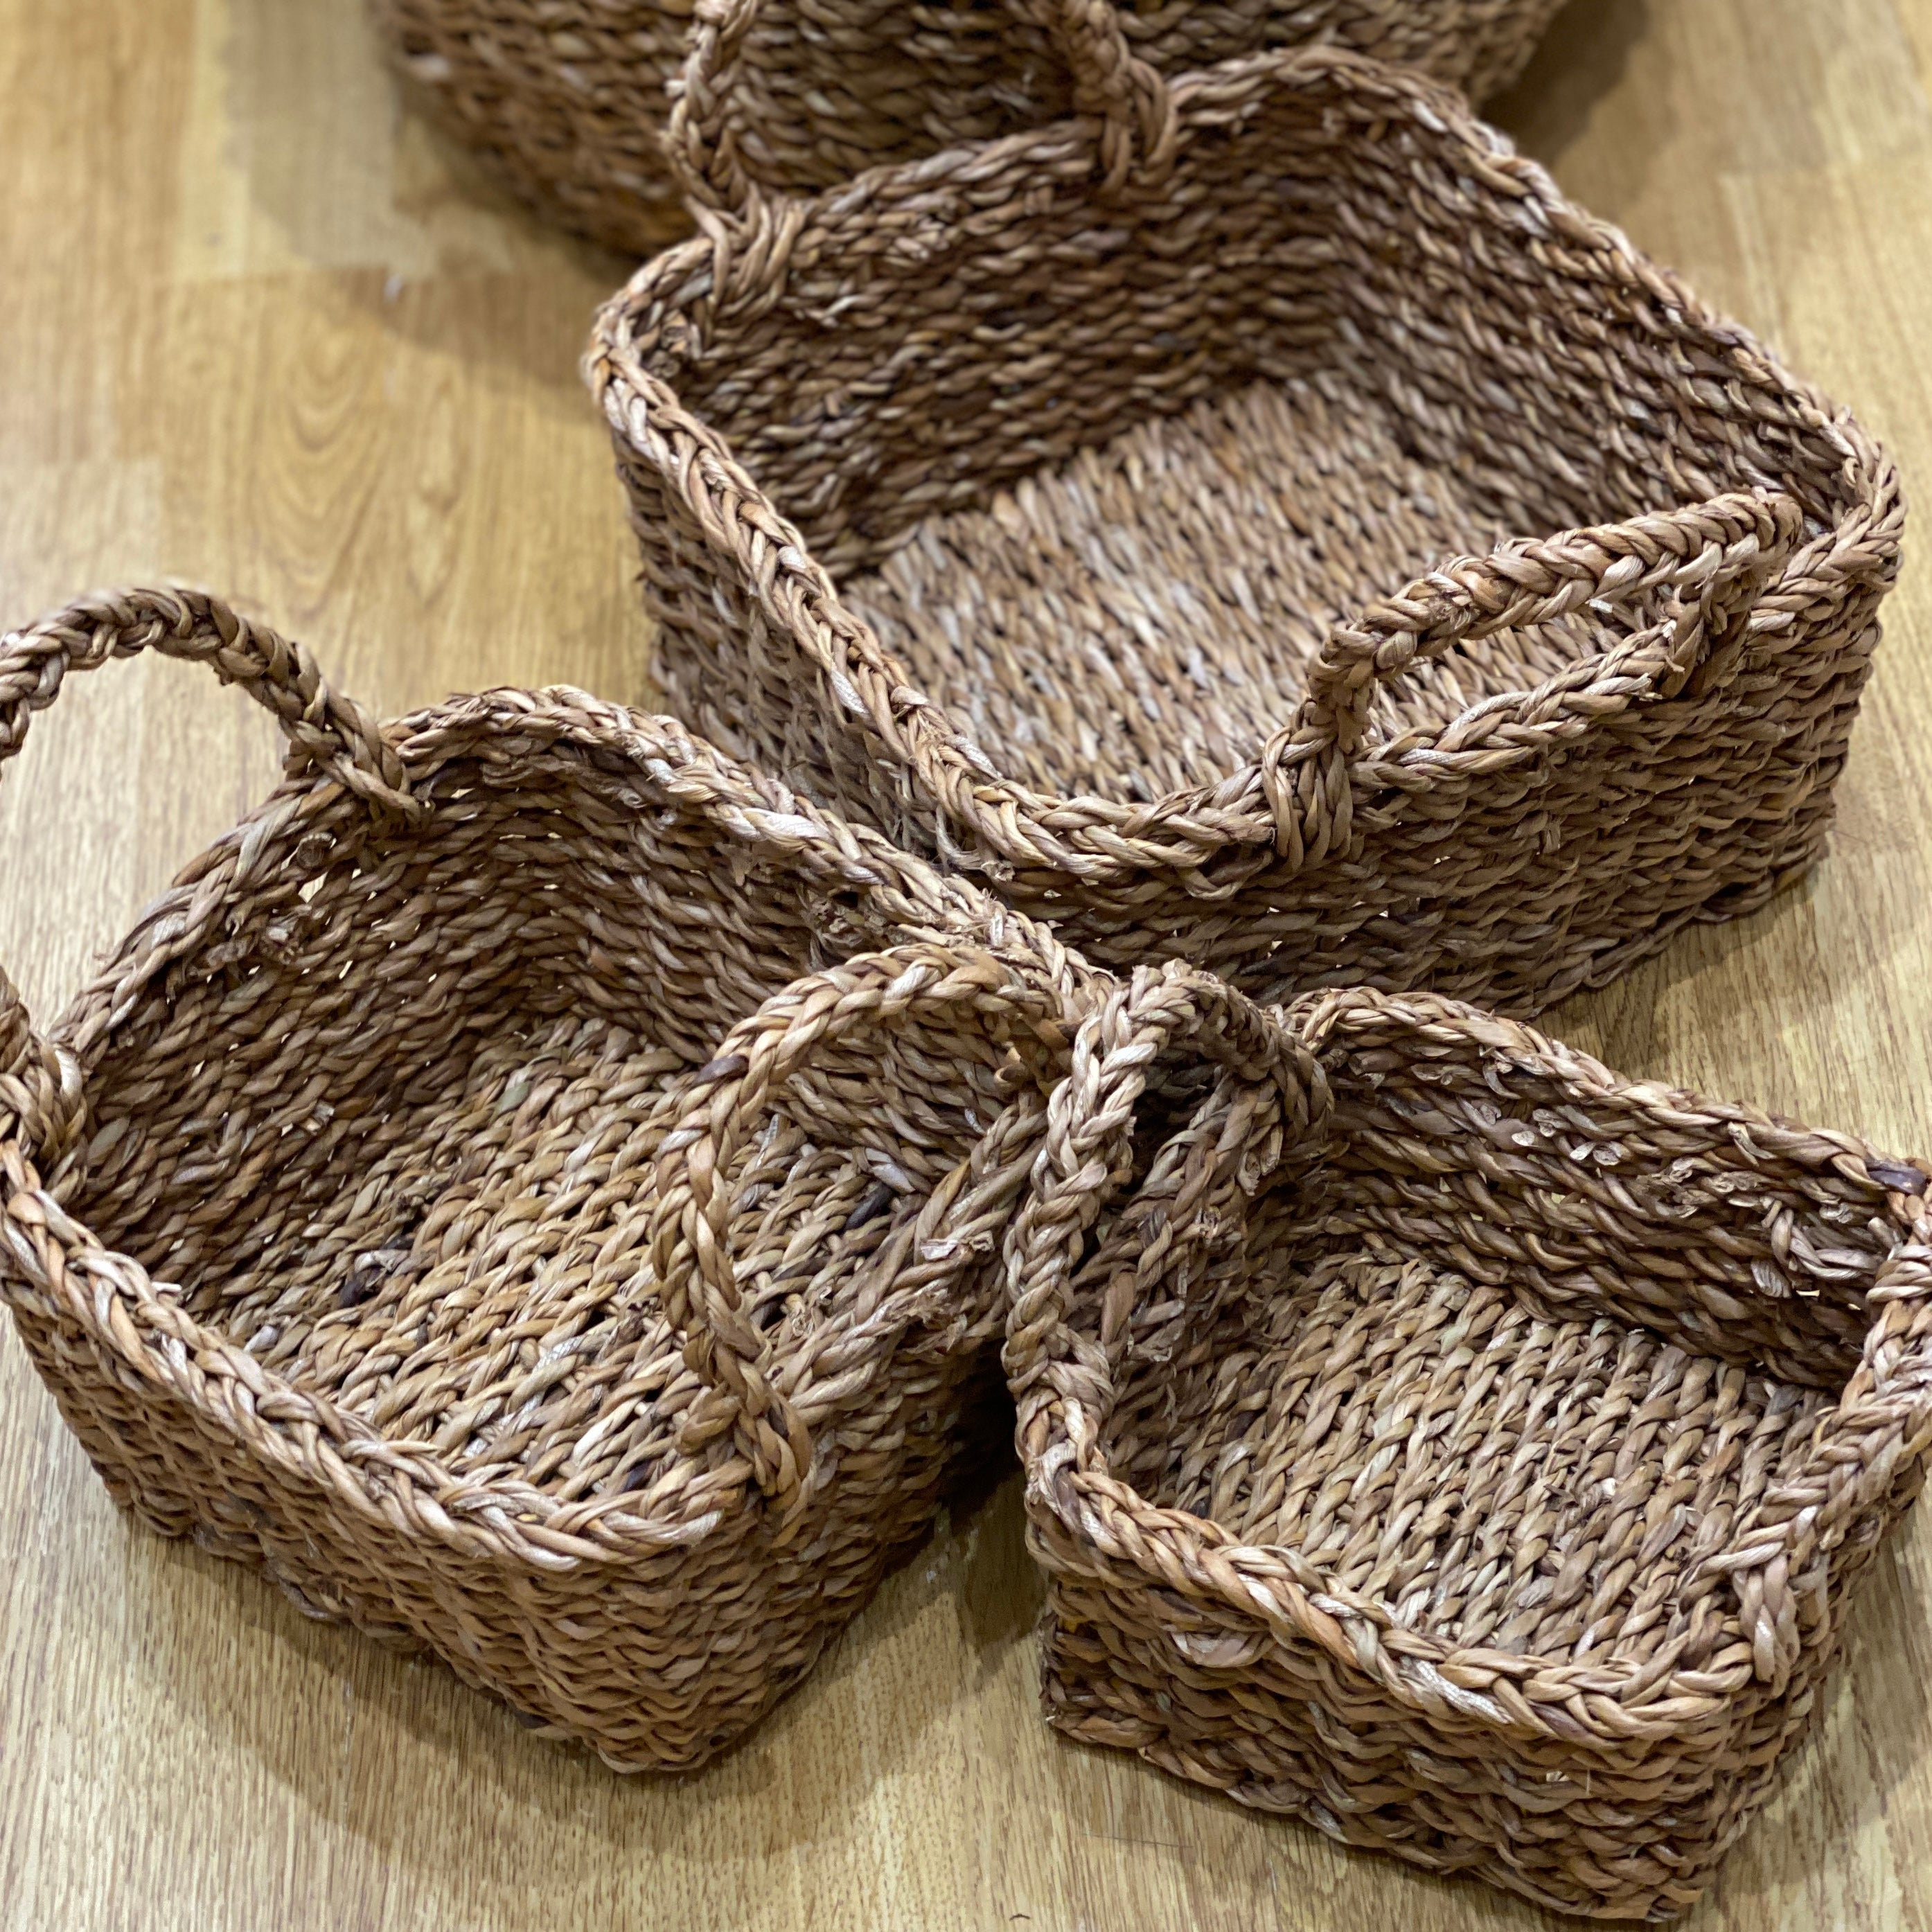 Small Square Baskets